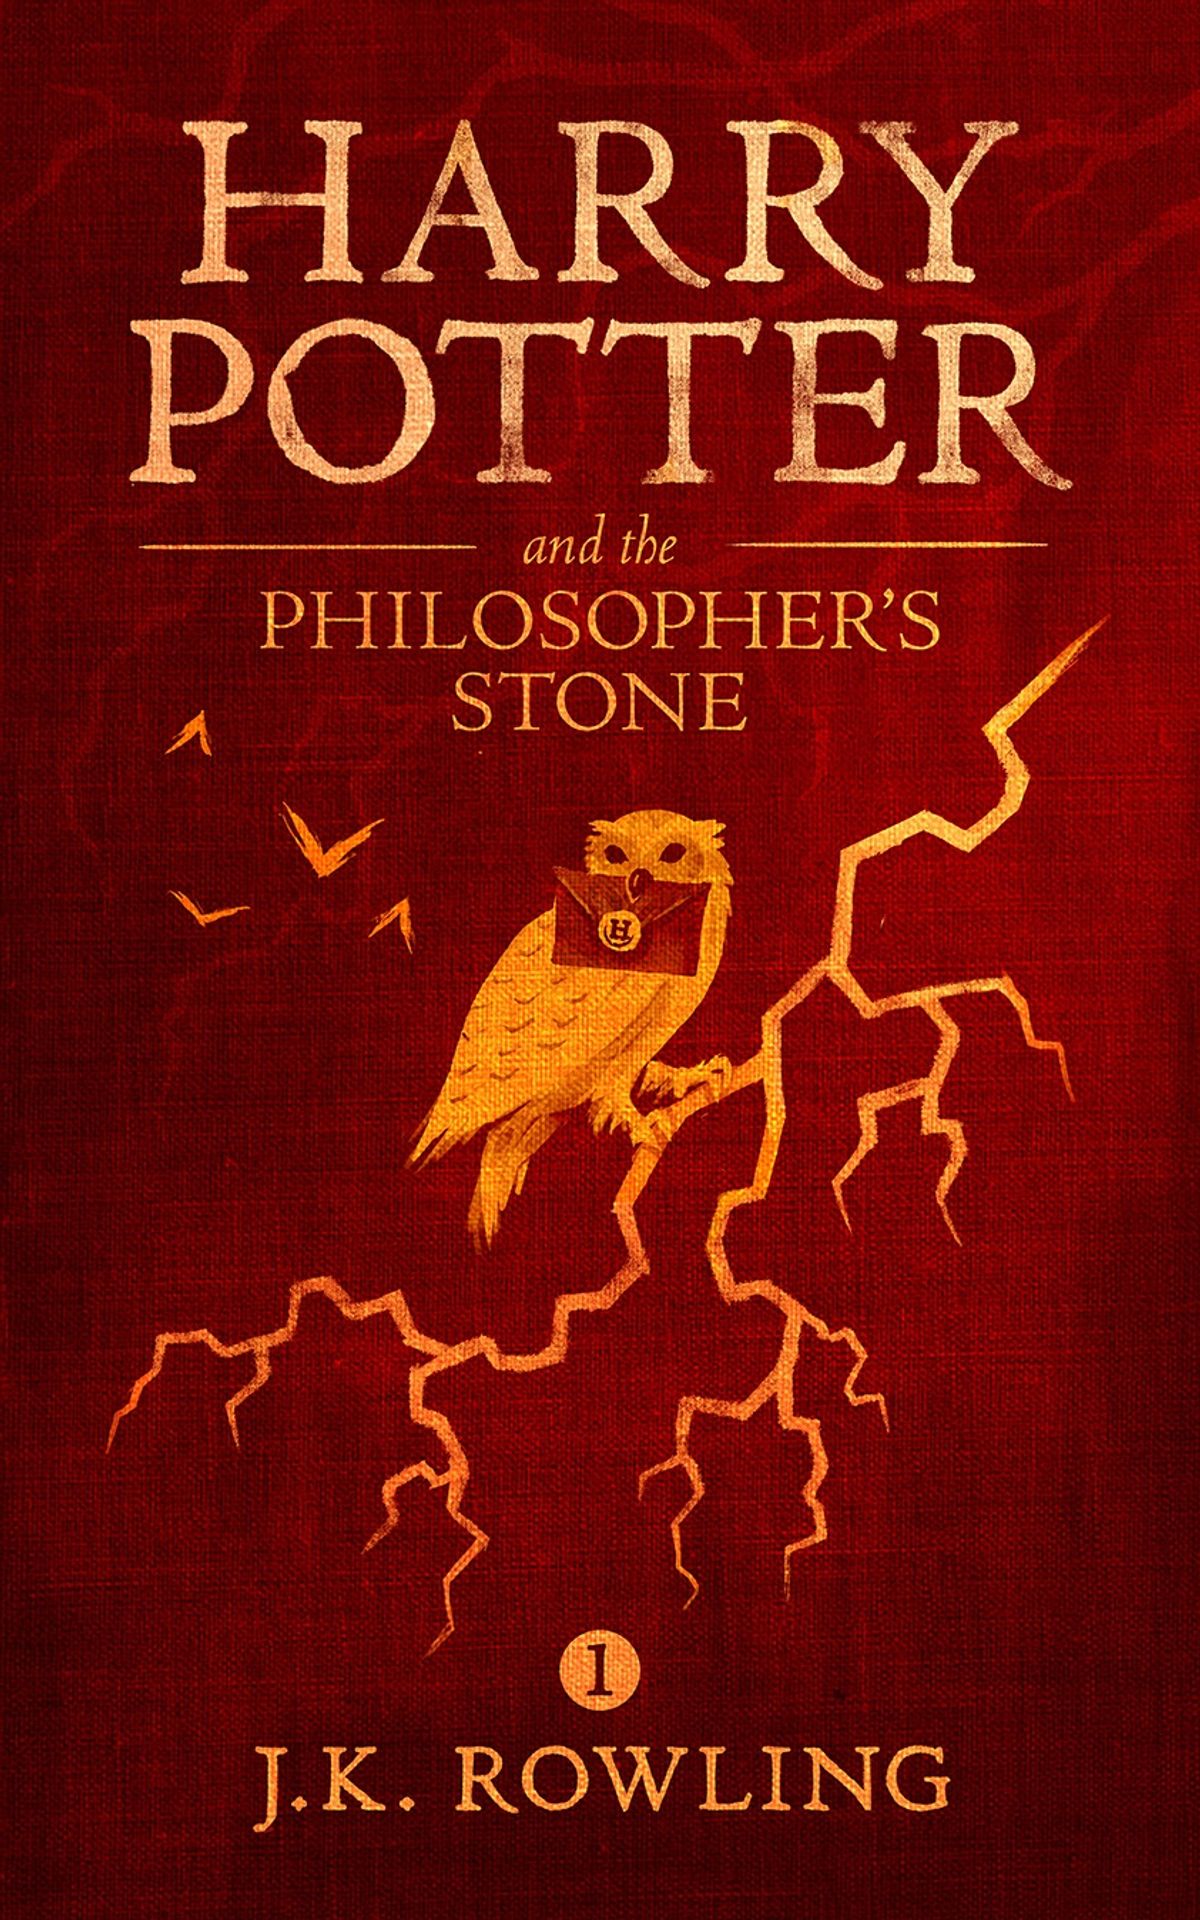 Harry Potter series by JK Rowling